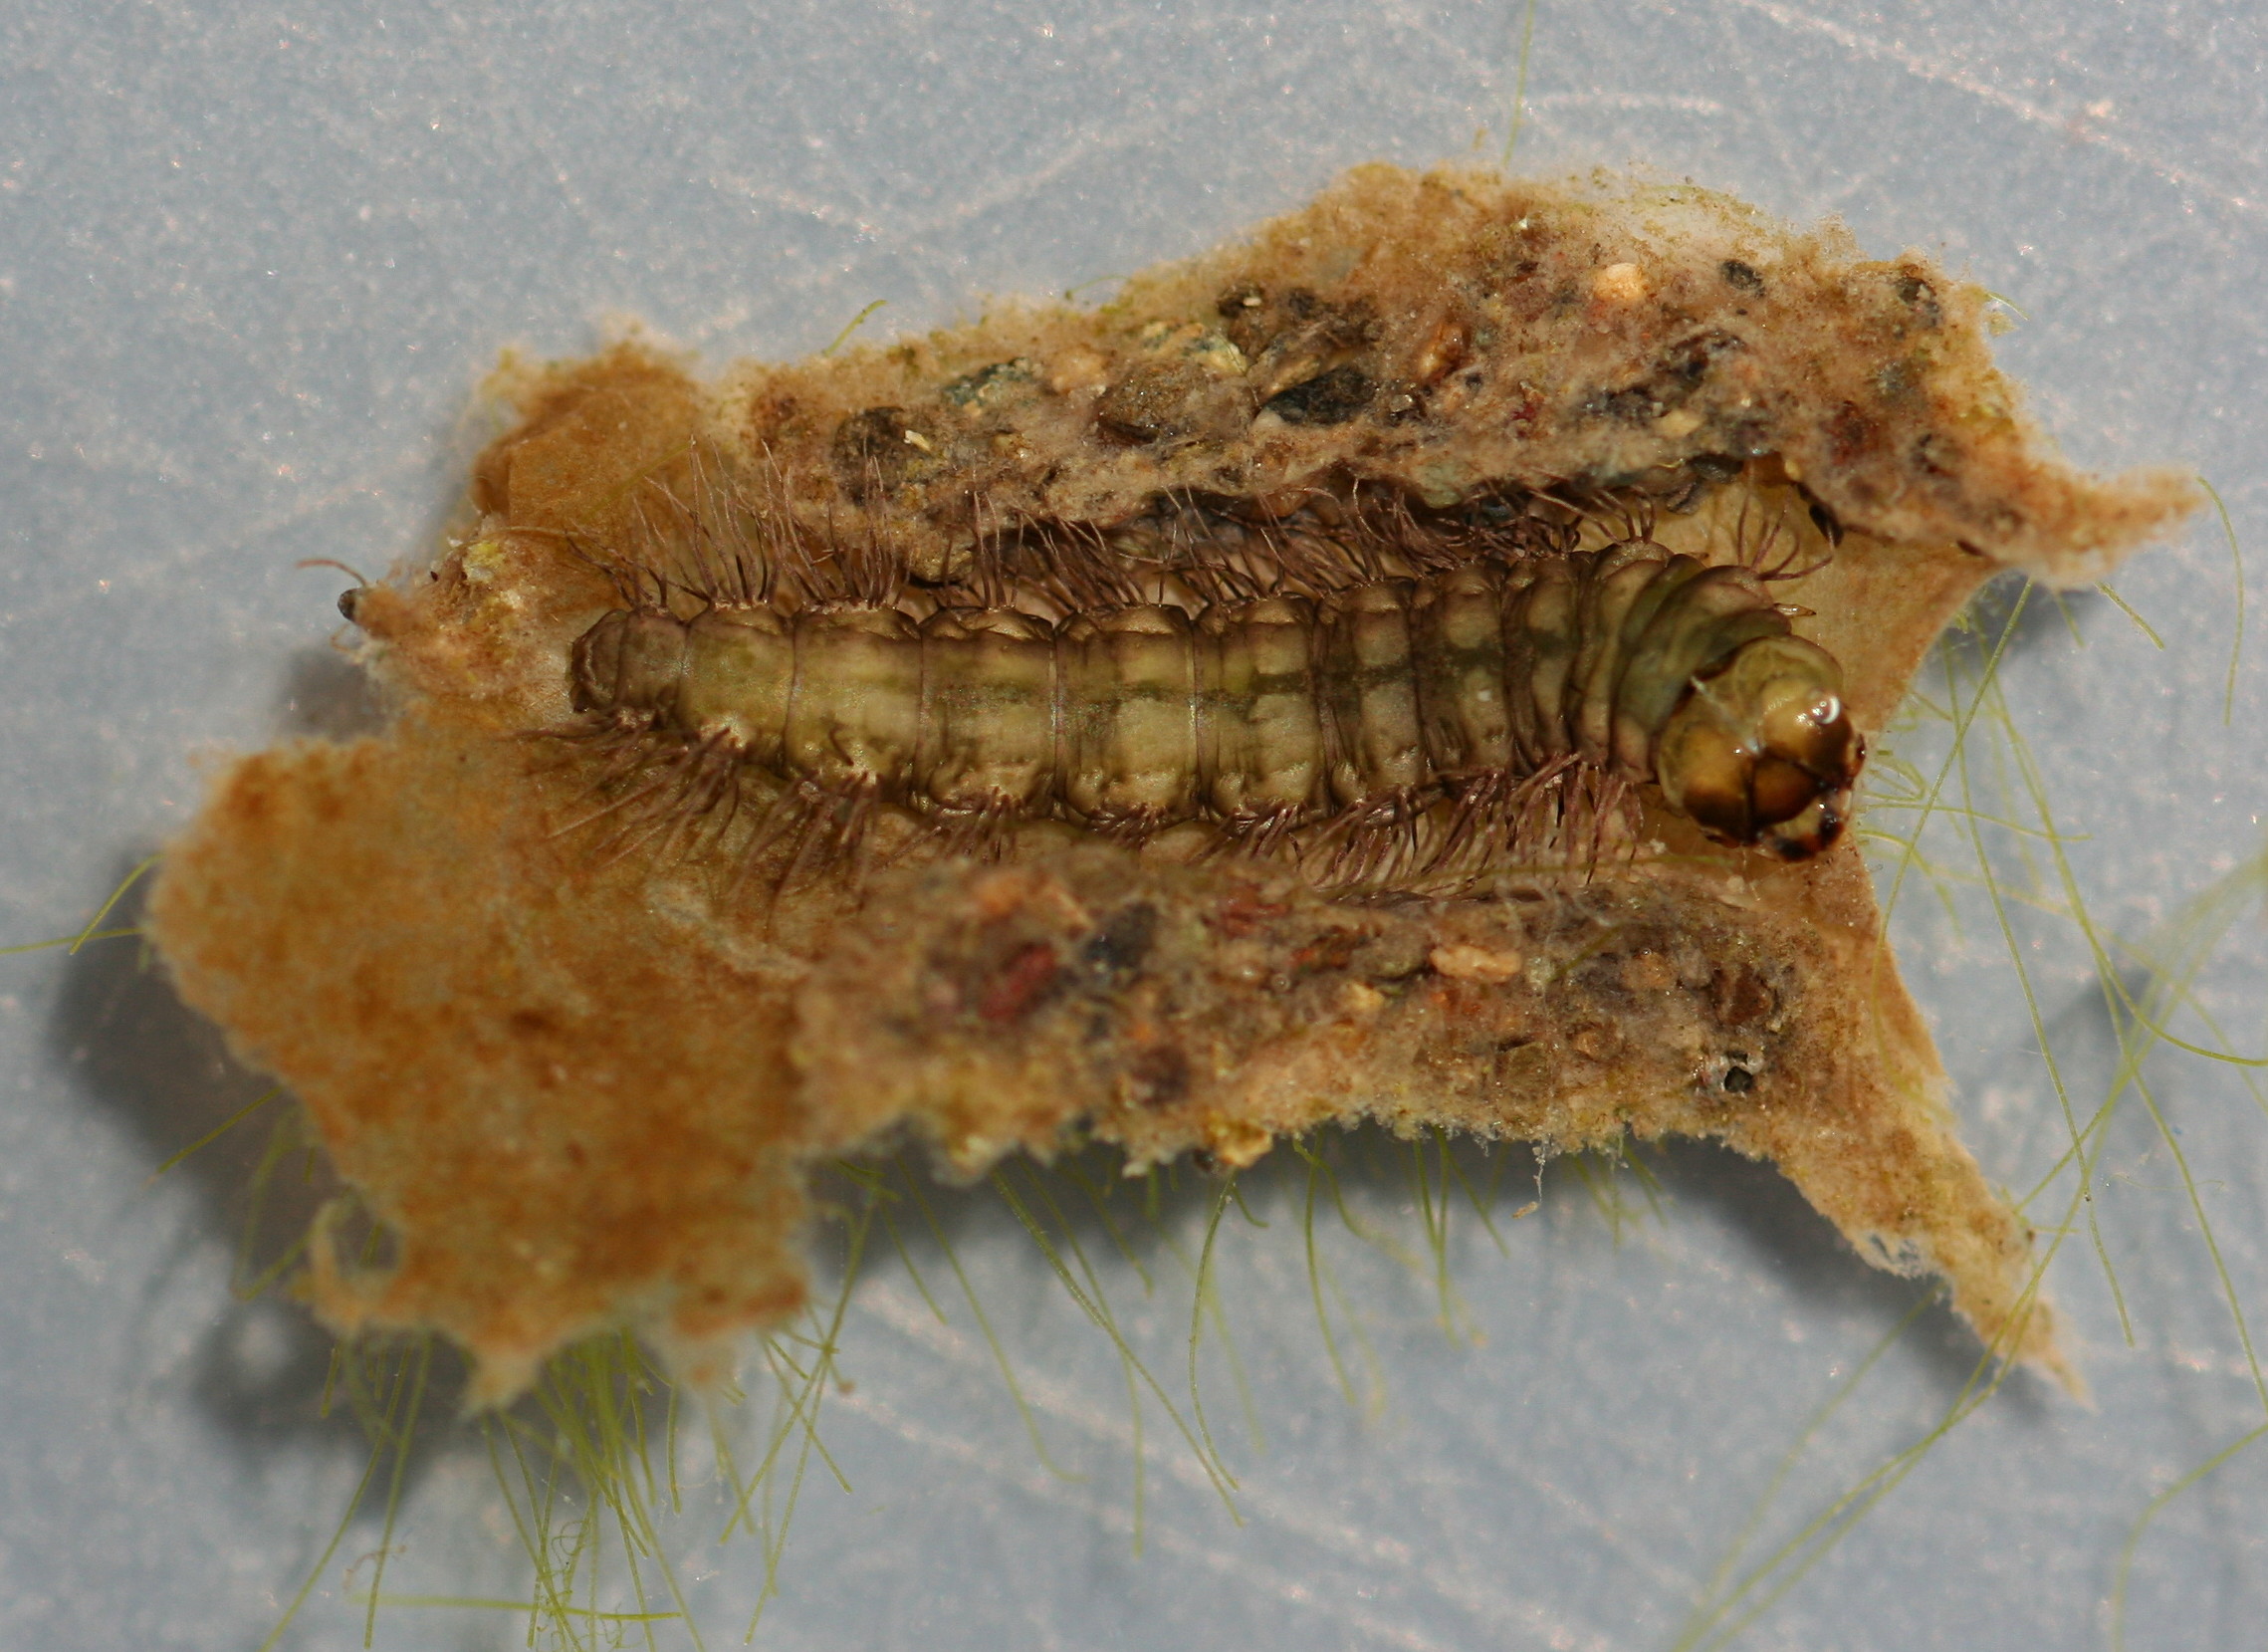 Larva with case. Larva 11 mm. Case 13 mm. Live specimen.